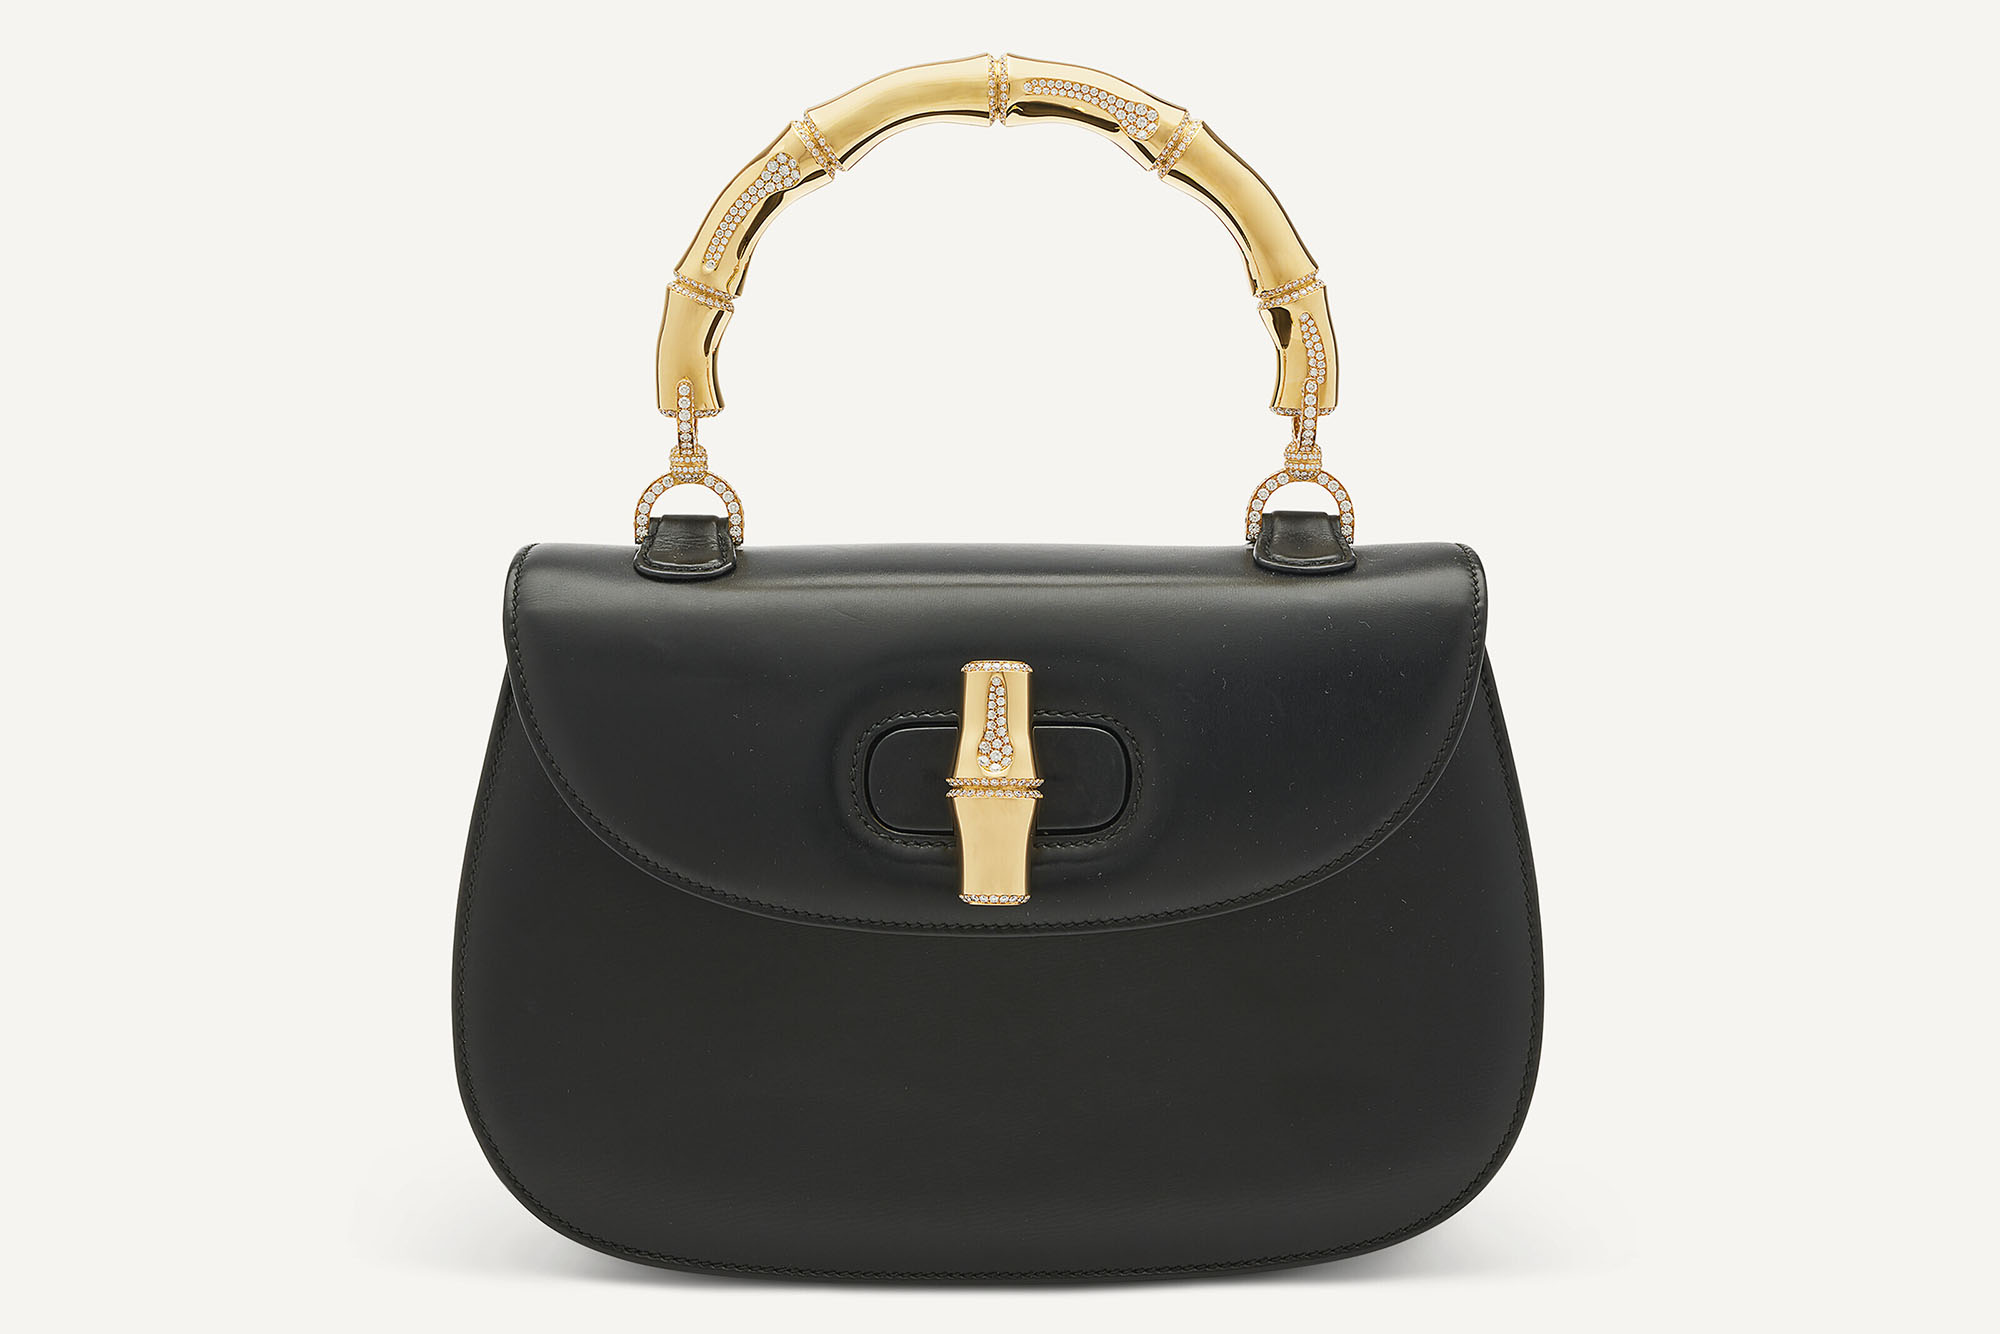 Gucci Mini Bags | Ophidia & Marmont | FARFETCH US